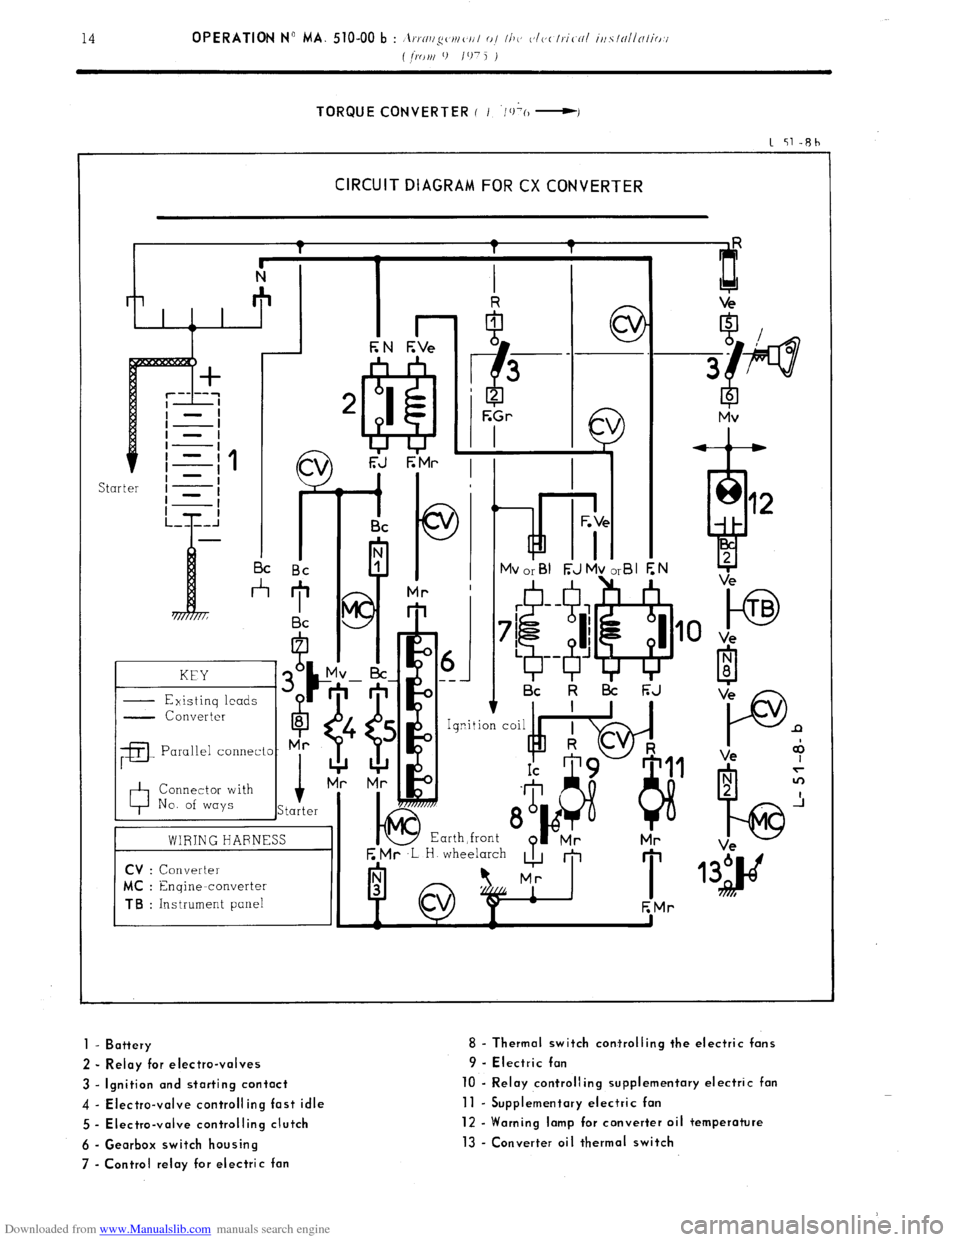 Citroen CX 1984 1.G Workshop Manual Downloaded from www.Manualslib.com manuals search engine TORQUE CONVERTER ( I ‘/+(I -I 
1 51-Rh 
CIRCUIT DIAGRAM FOR CX CONVERTER 
kd i- I I I c 
I I Bc Bc 
* 
KEY 
- Existinq leads G 
- Converter 
